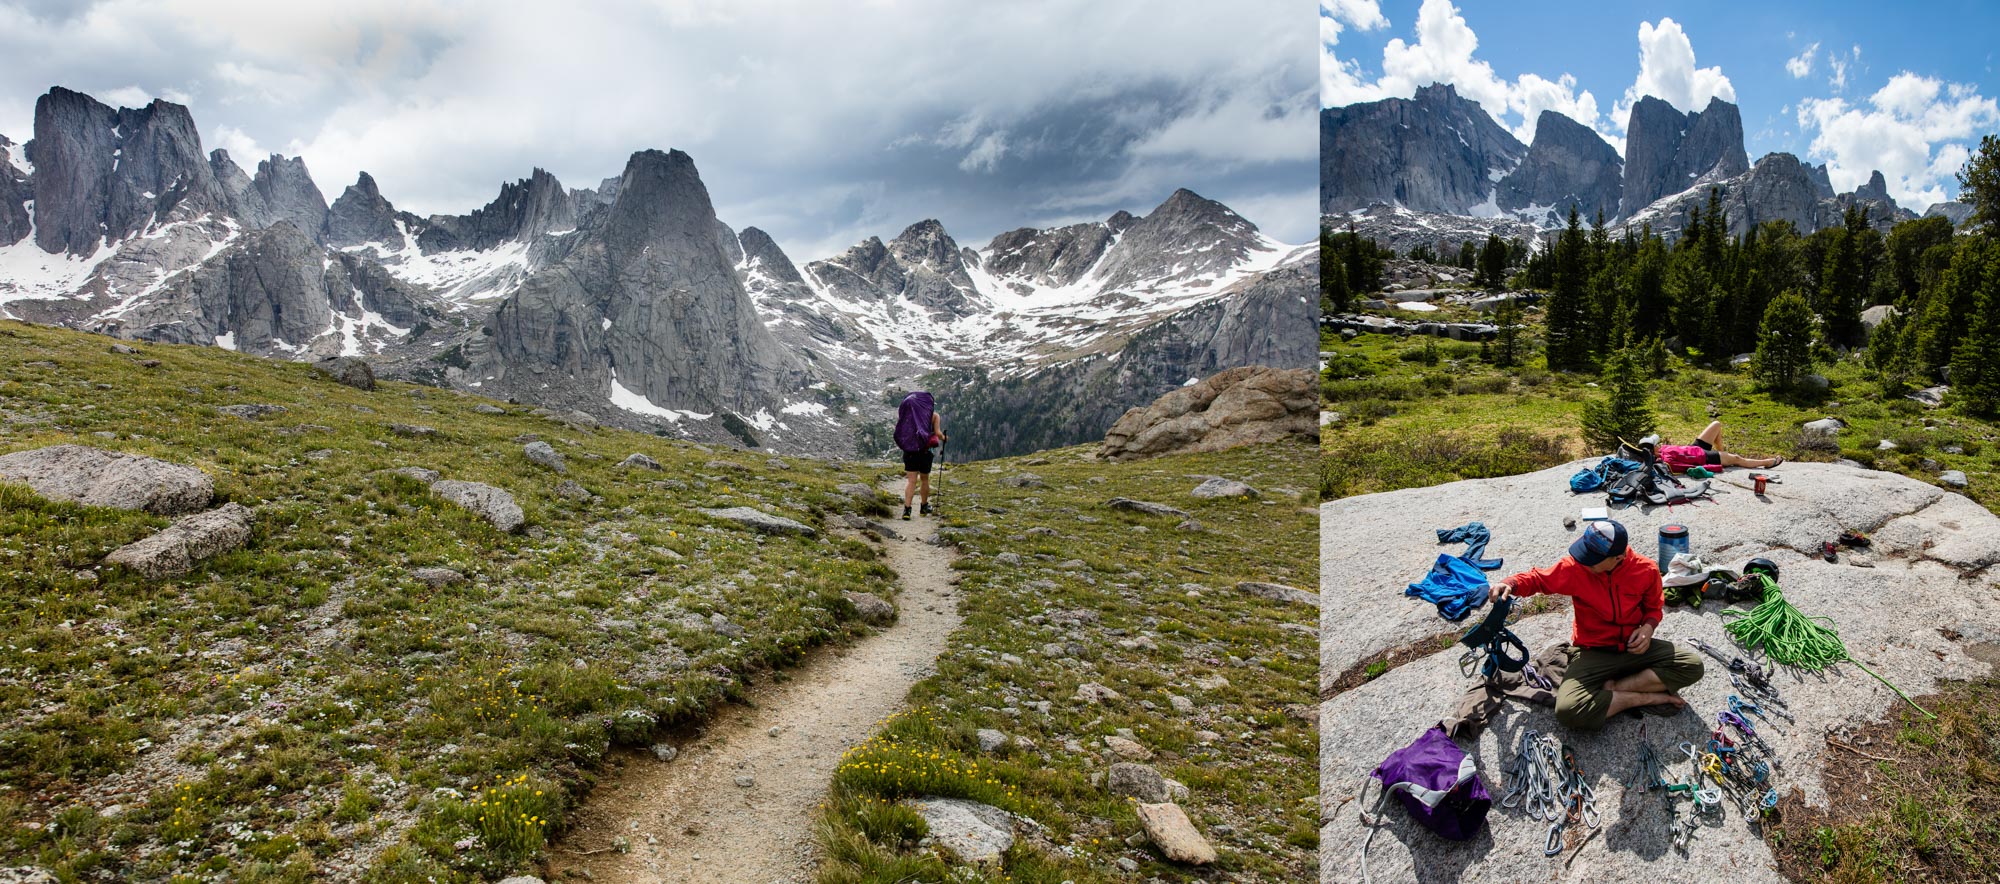 climbing-hiking-alpine-lifestyle-backpacking-wind-river-range